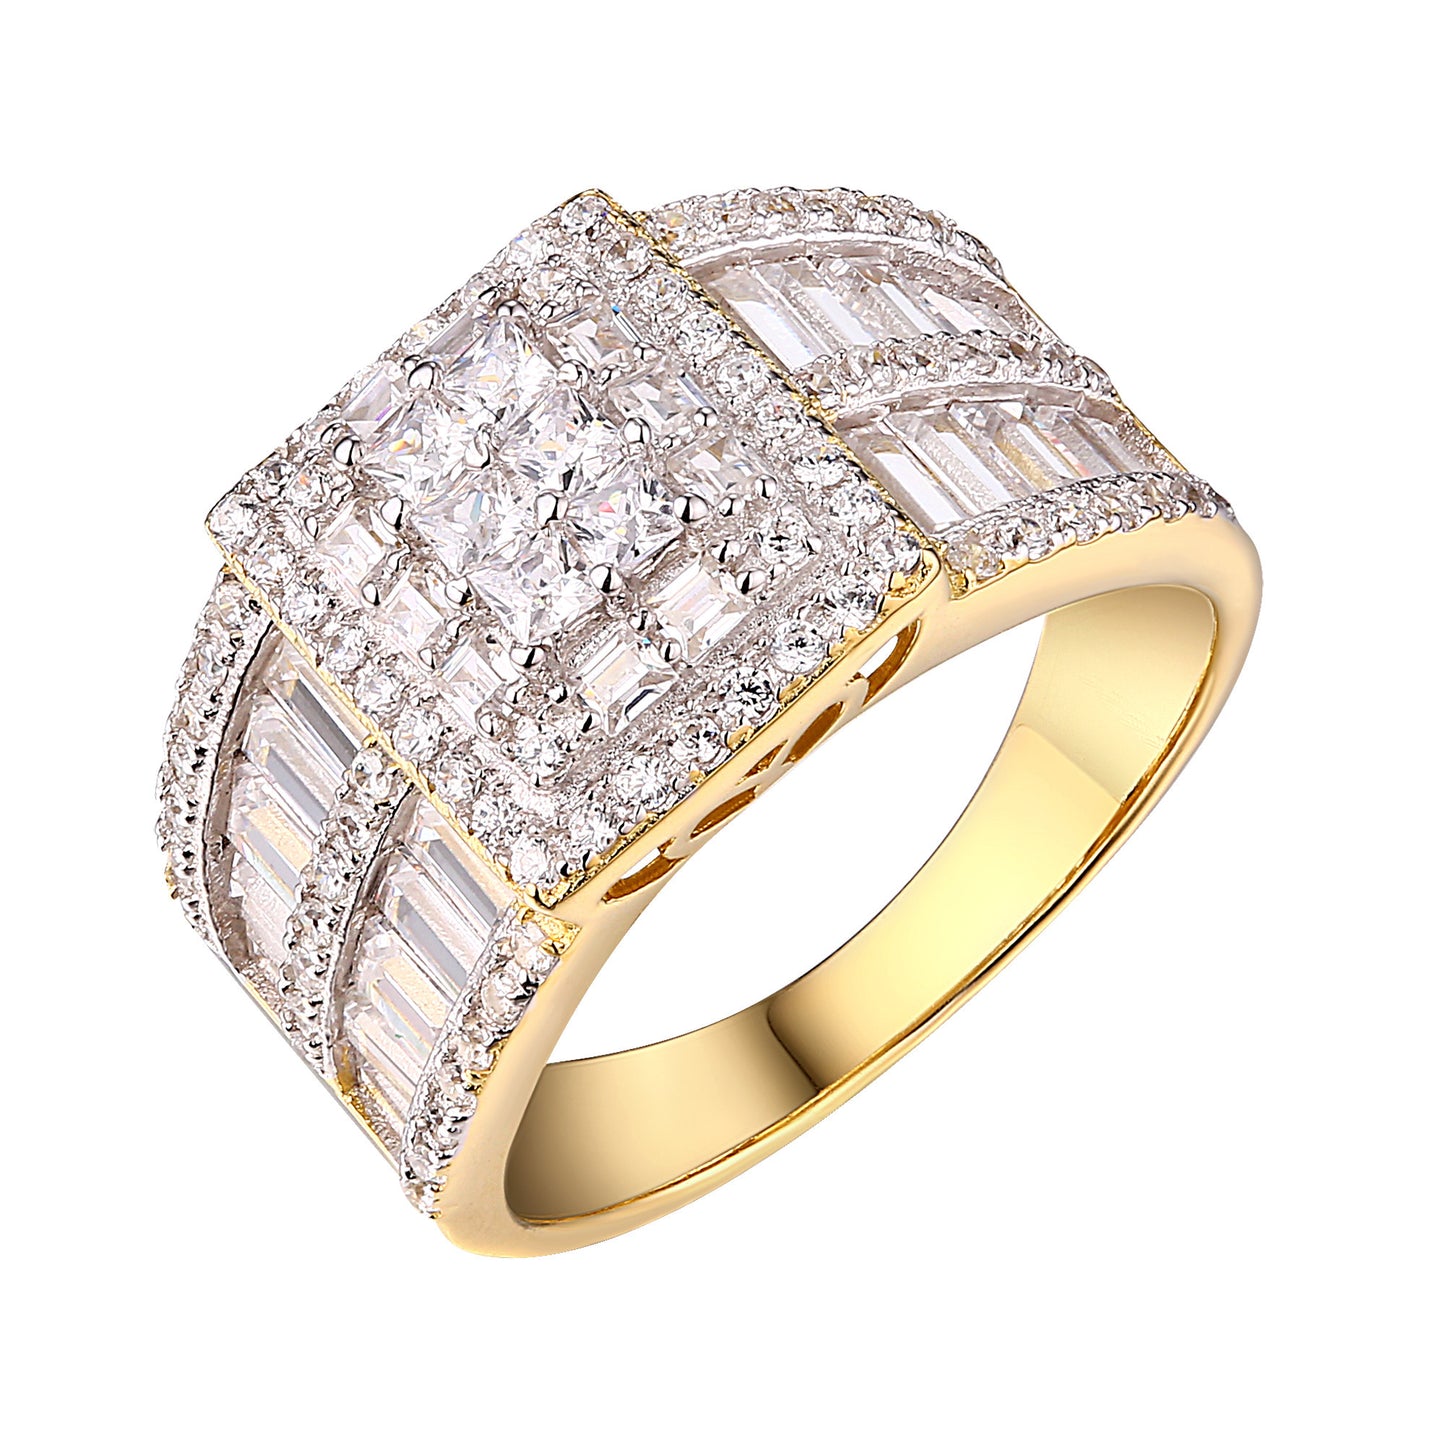 Sterling Silver Womens Ring Wedding Bridal Simulated Diamonds Gold Tone Elegant